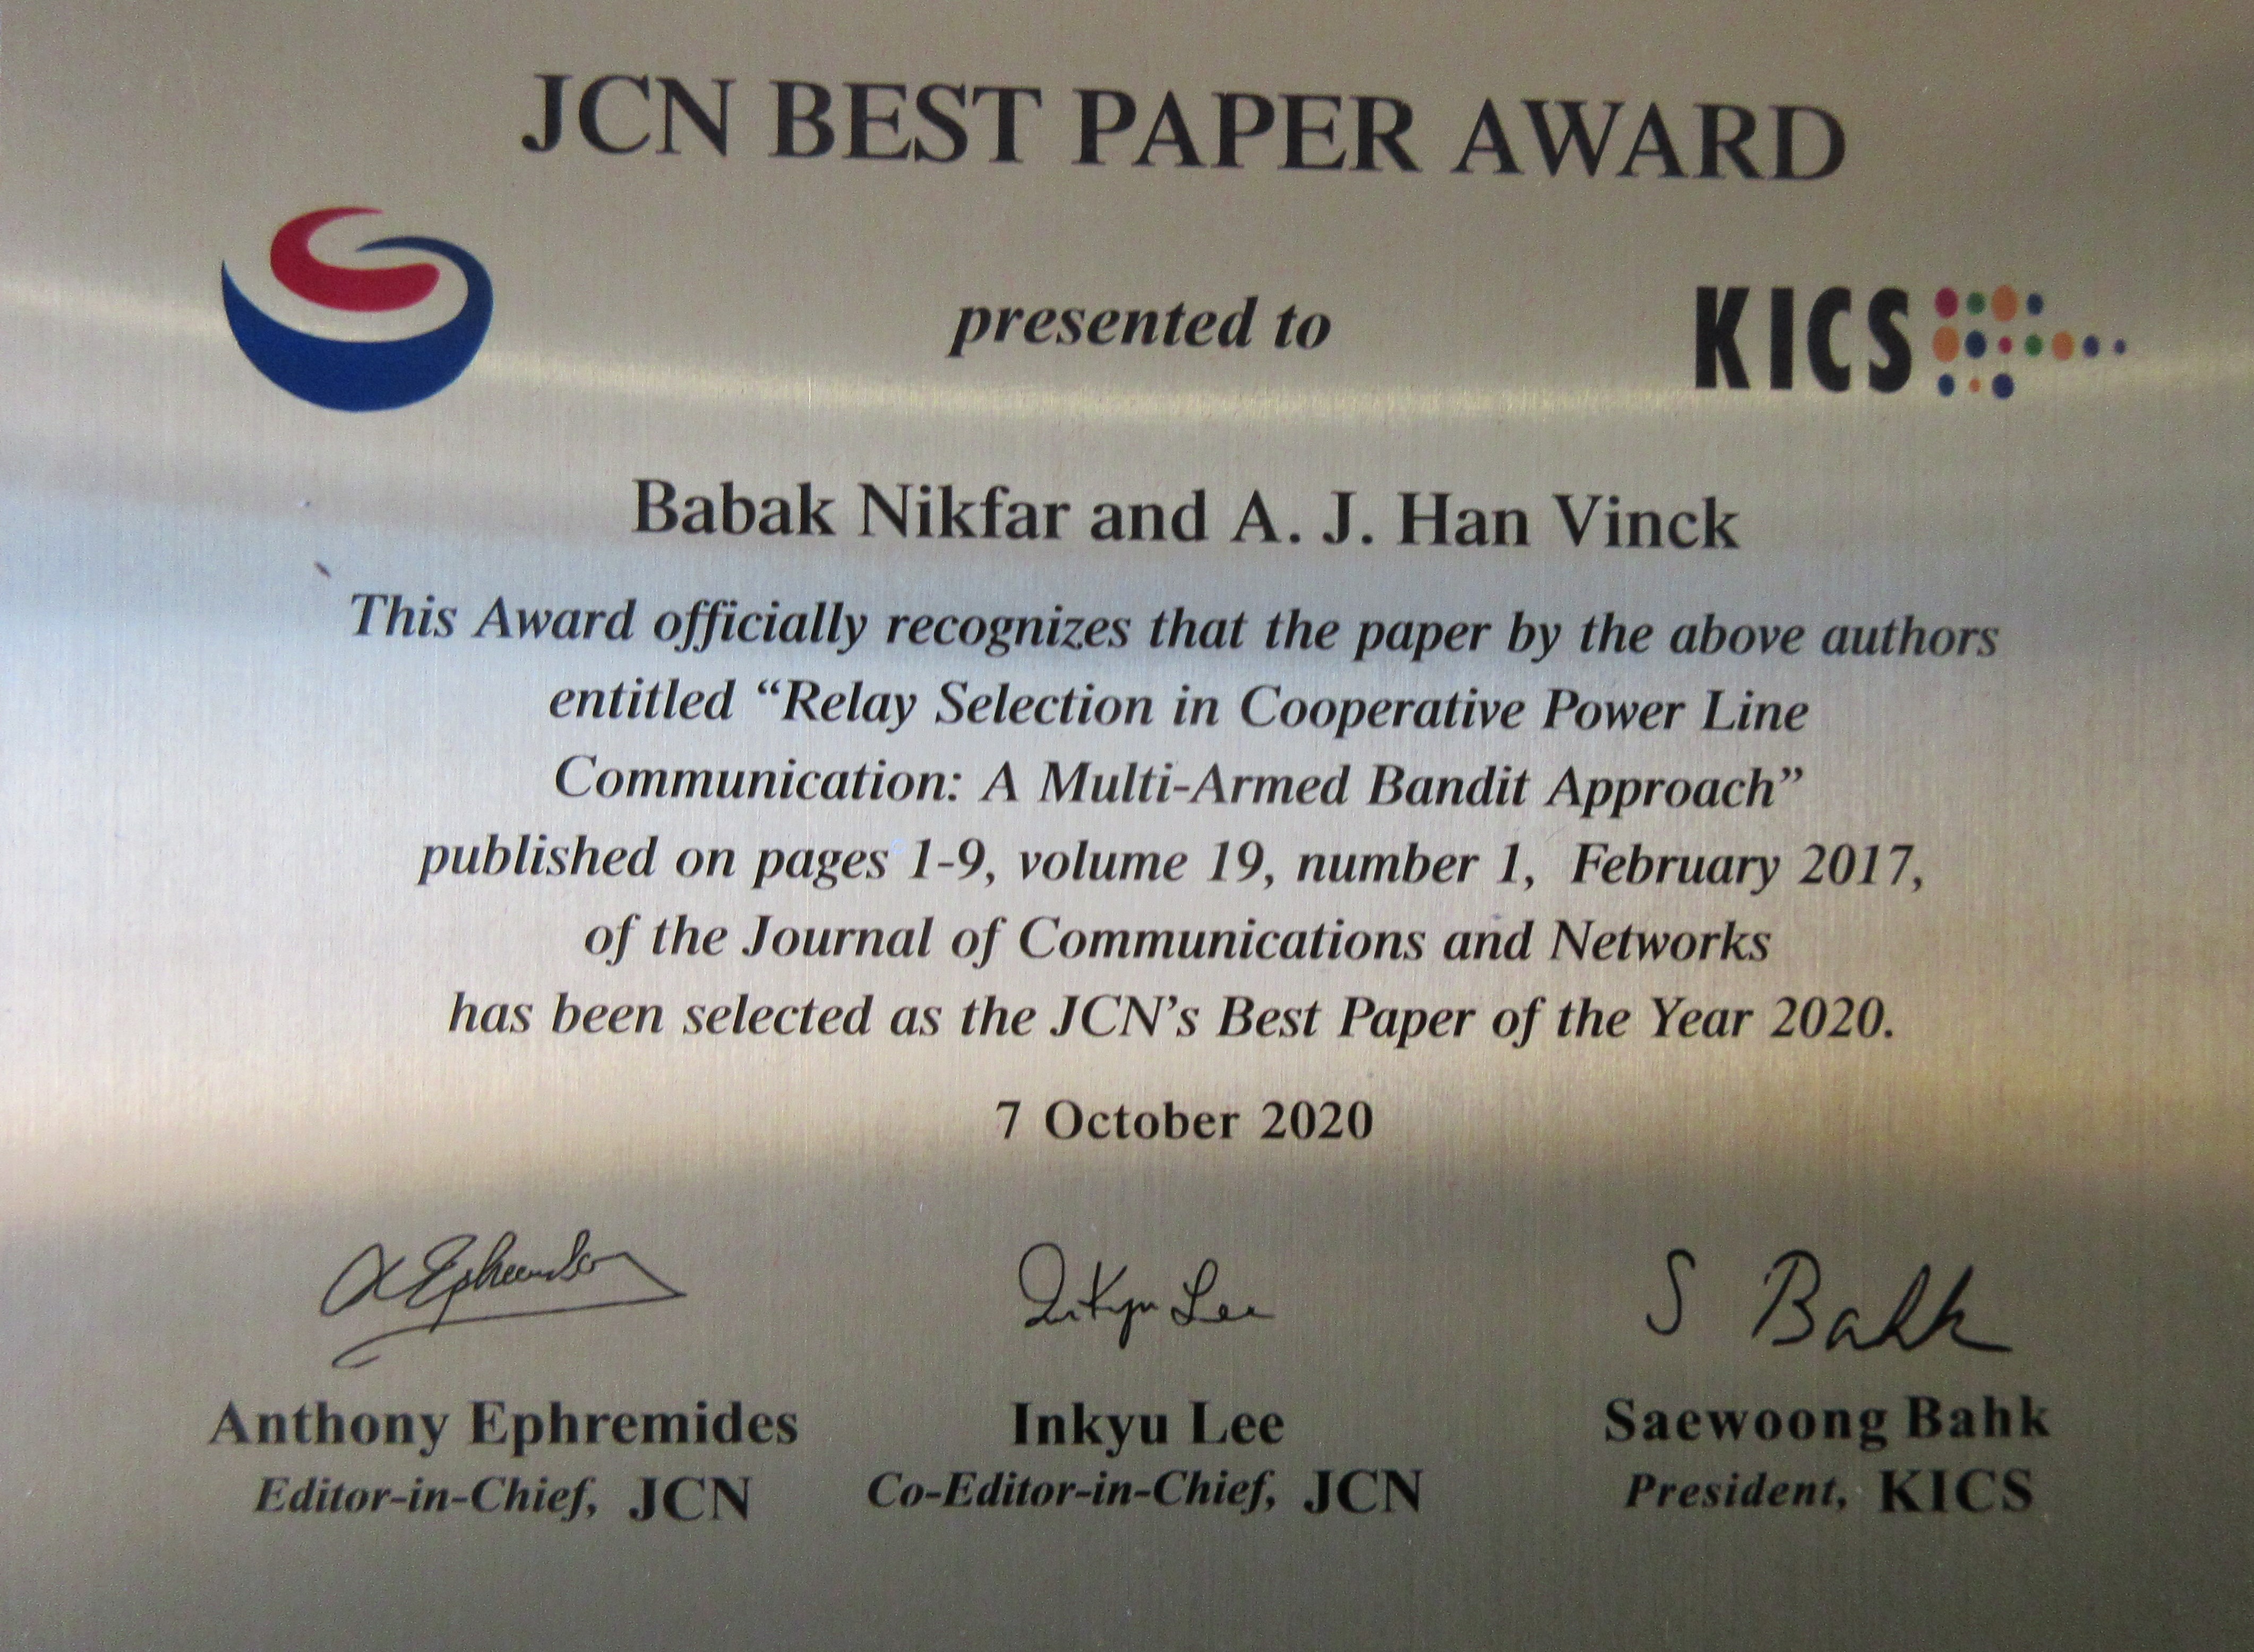 Paper Award With Babak Nikfar